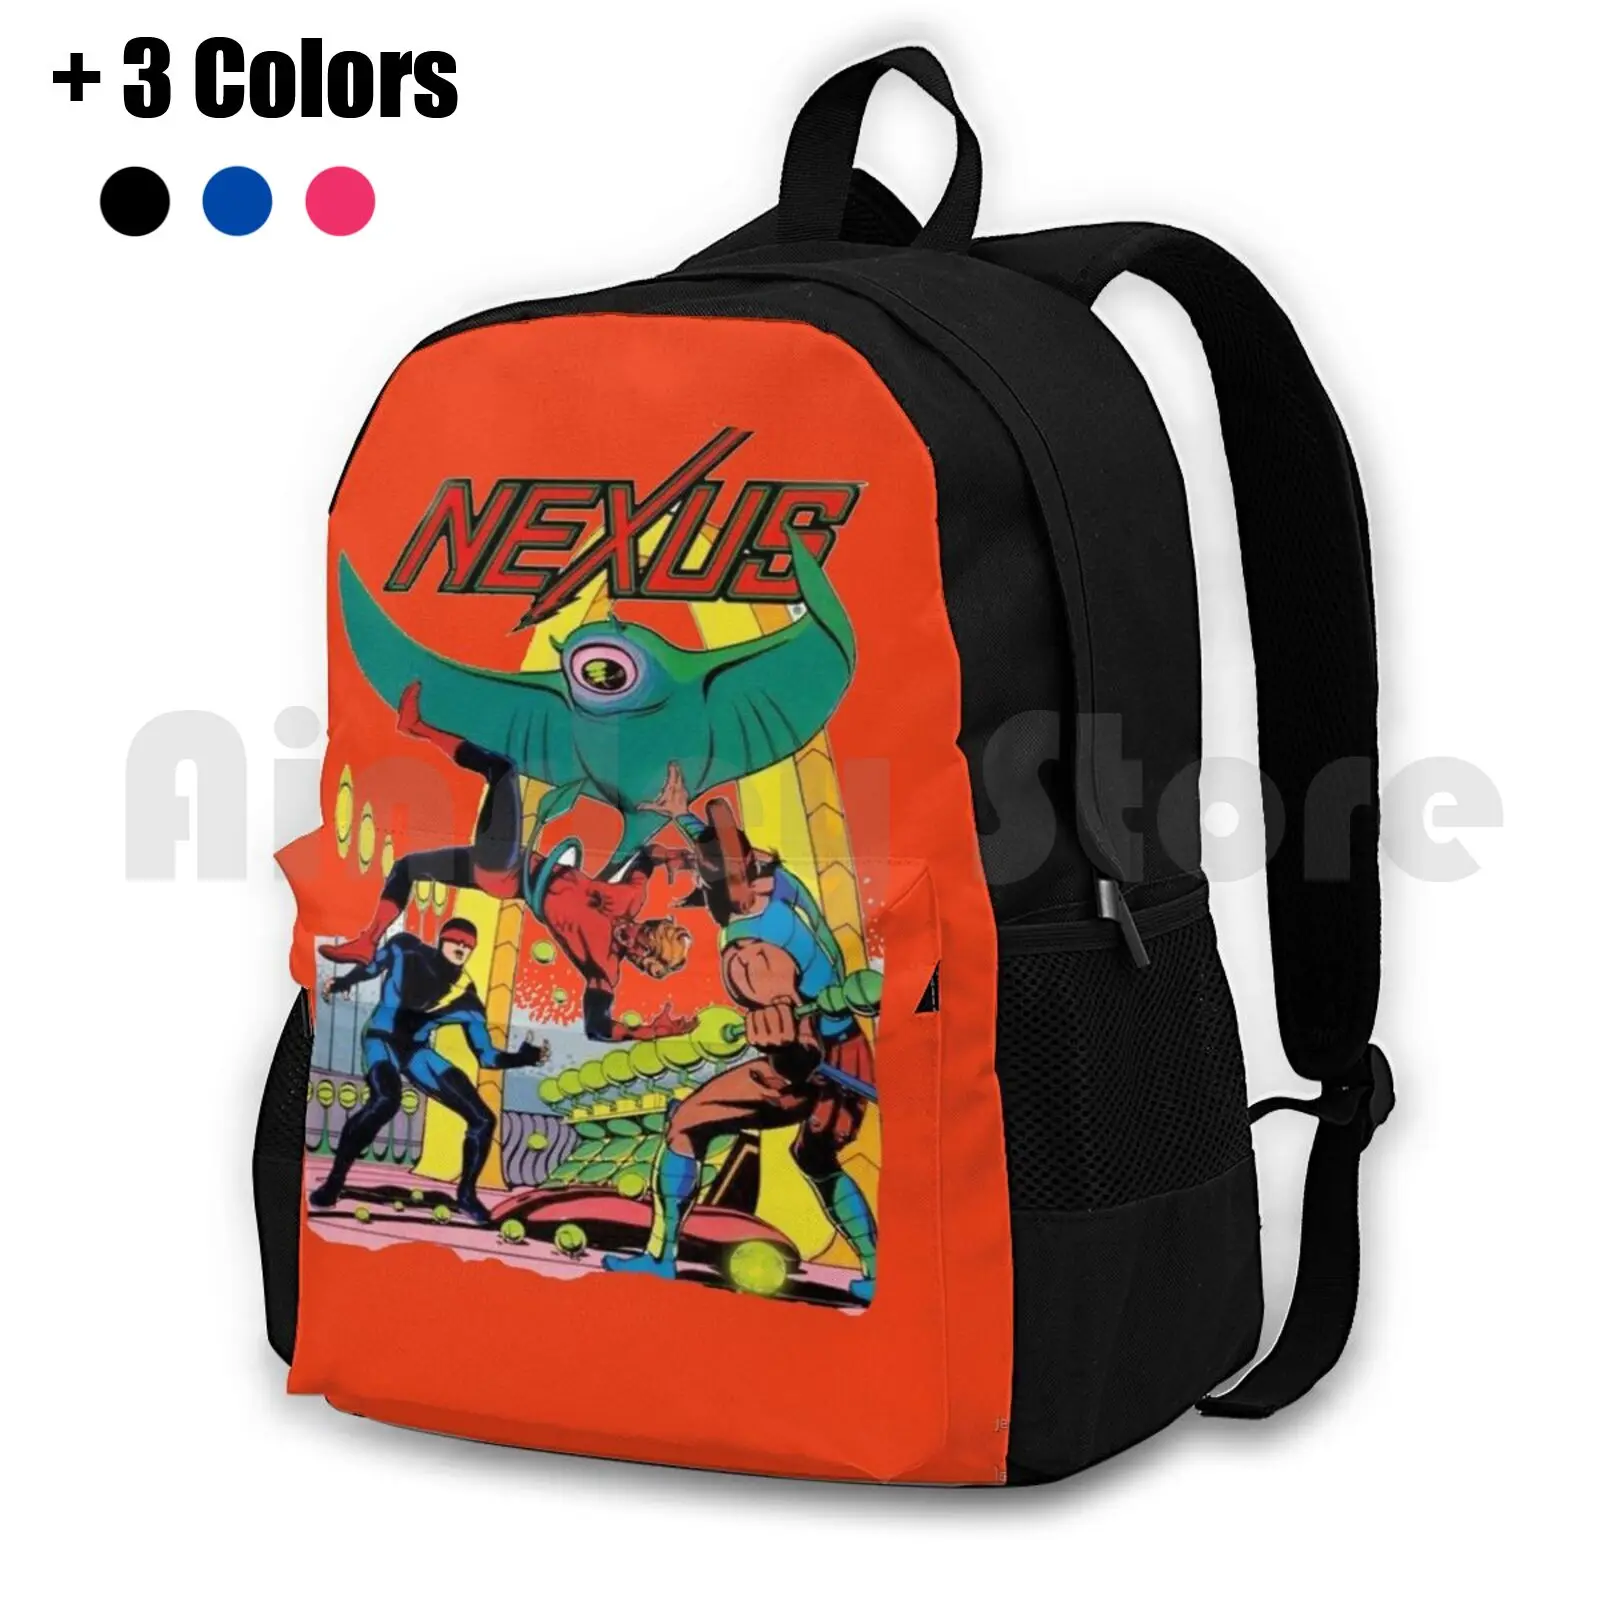 

Nexus Outdoor Hiking Backpack Riding Climbing Sports Bag Comic Book Vintage Superhero Phantom Classic Humor Parody